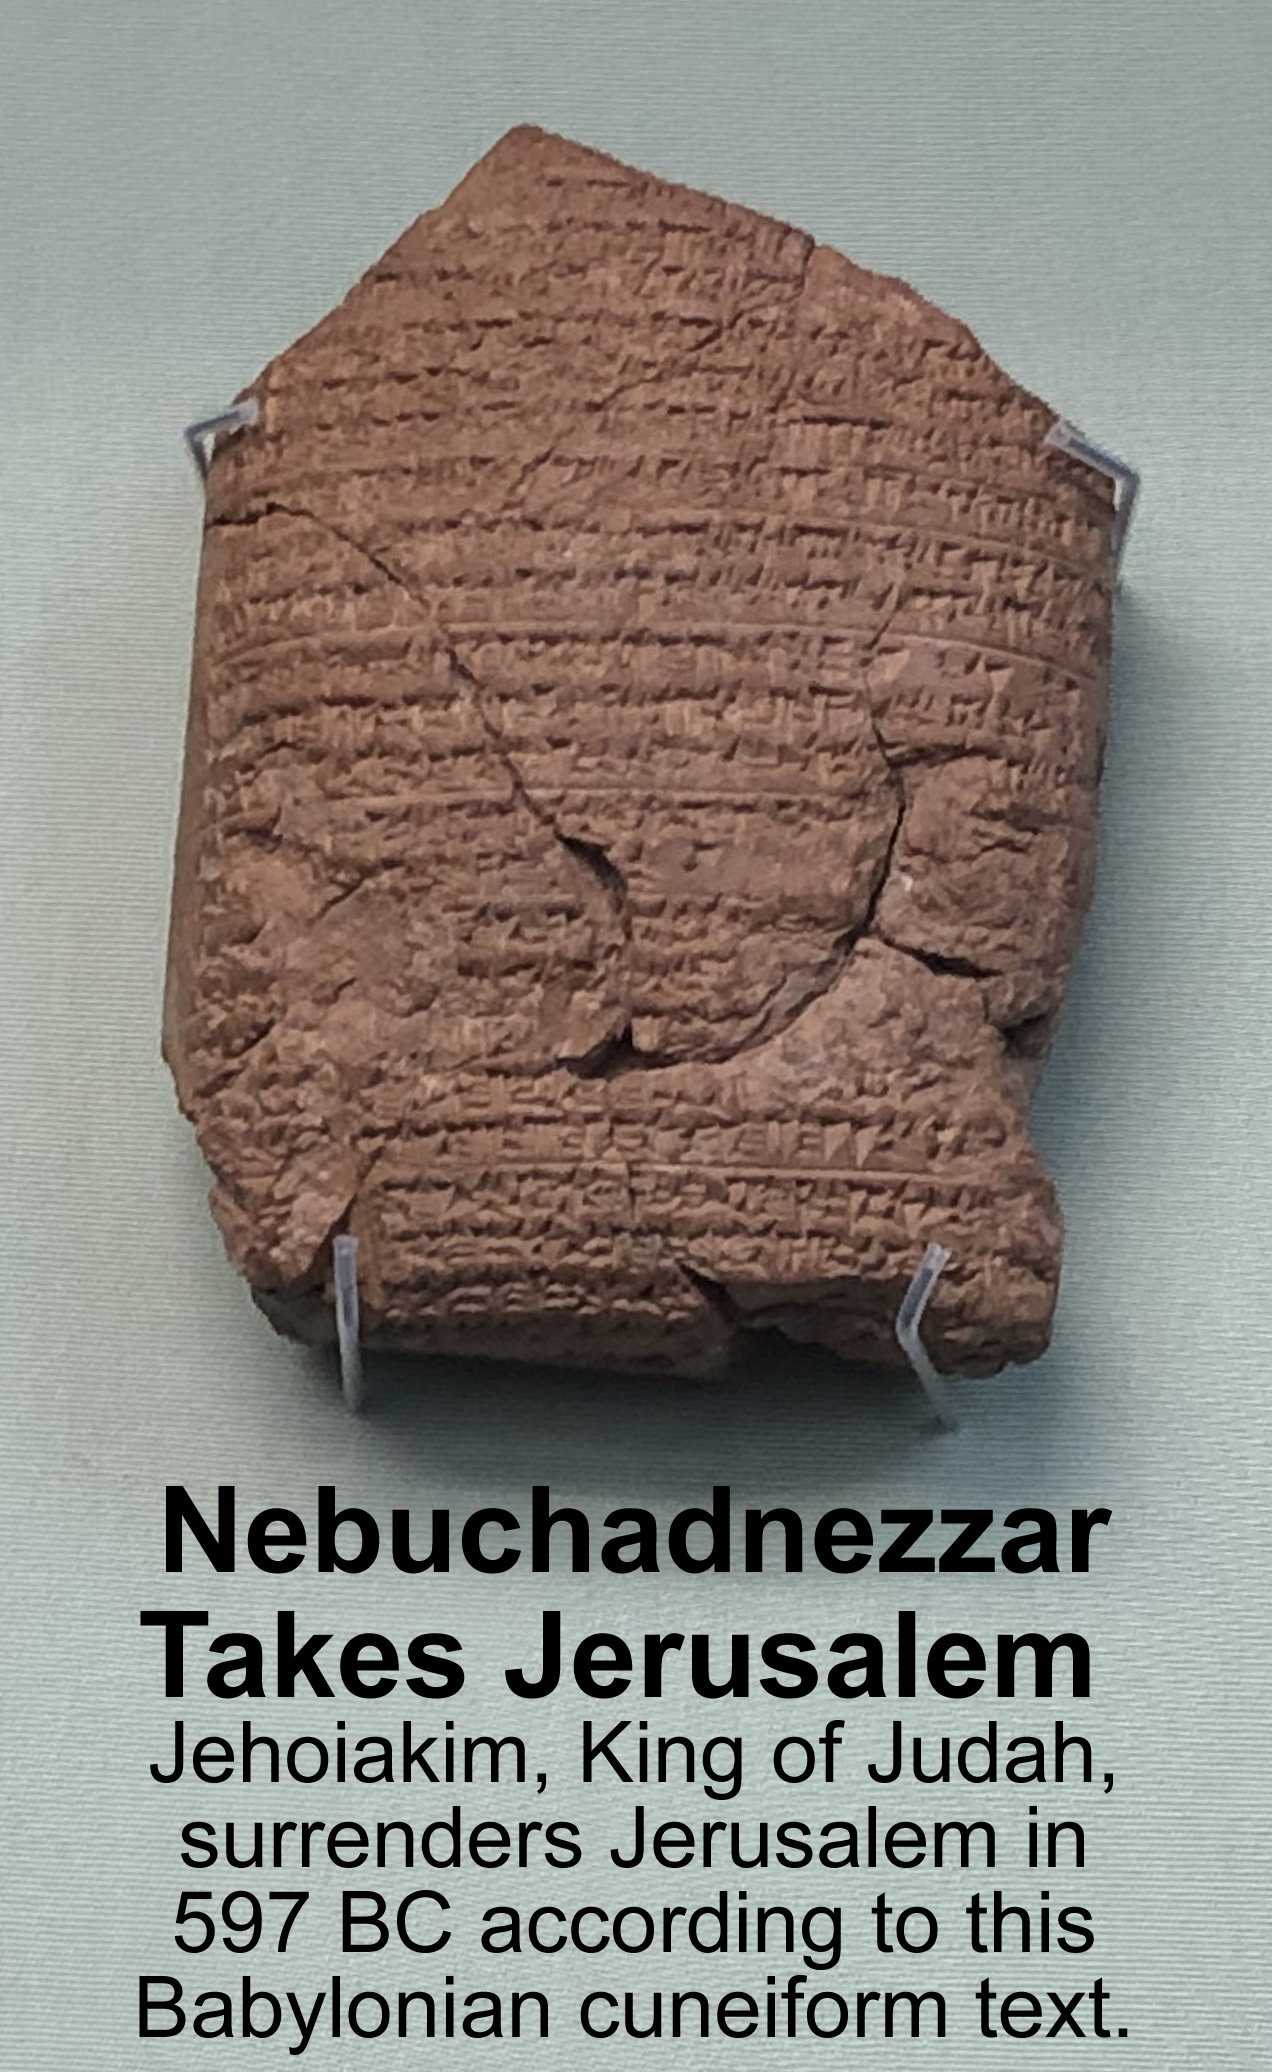 Nebuchadnezzar's discription of taking Jerusalem in 597 on cuneiform tablet in Babylonian Chronicles